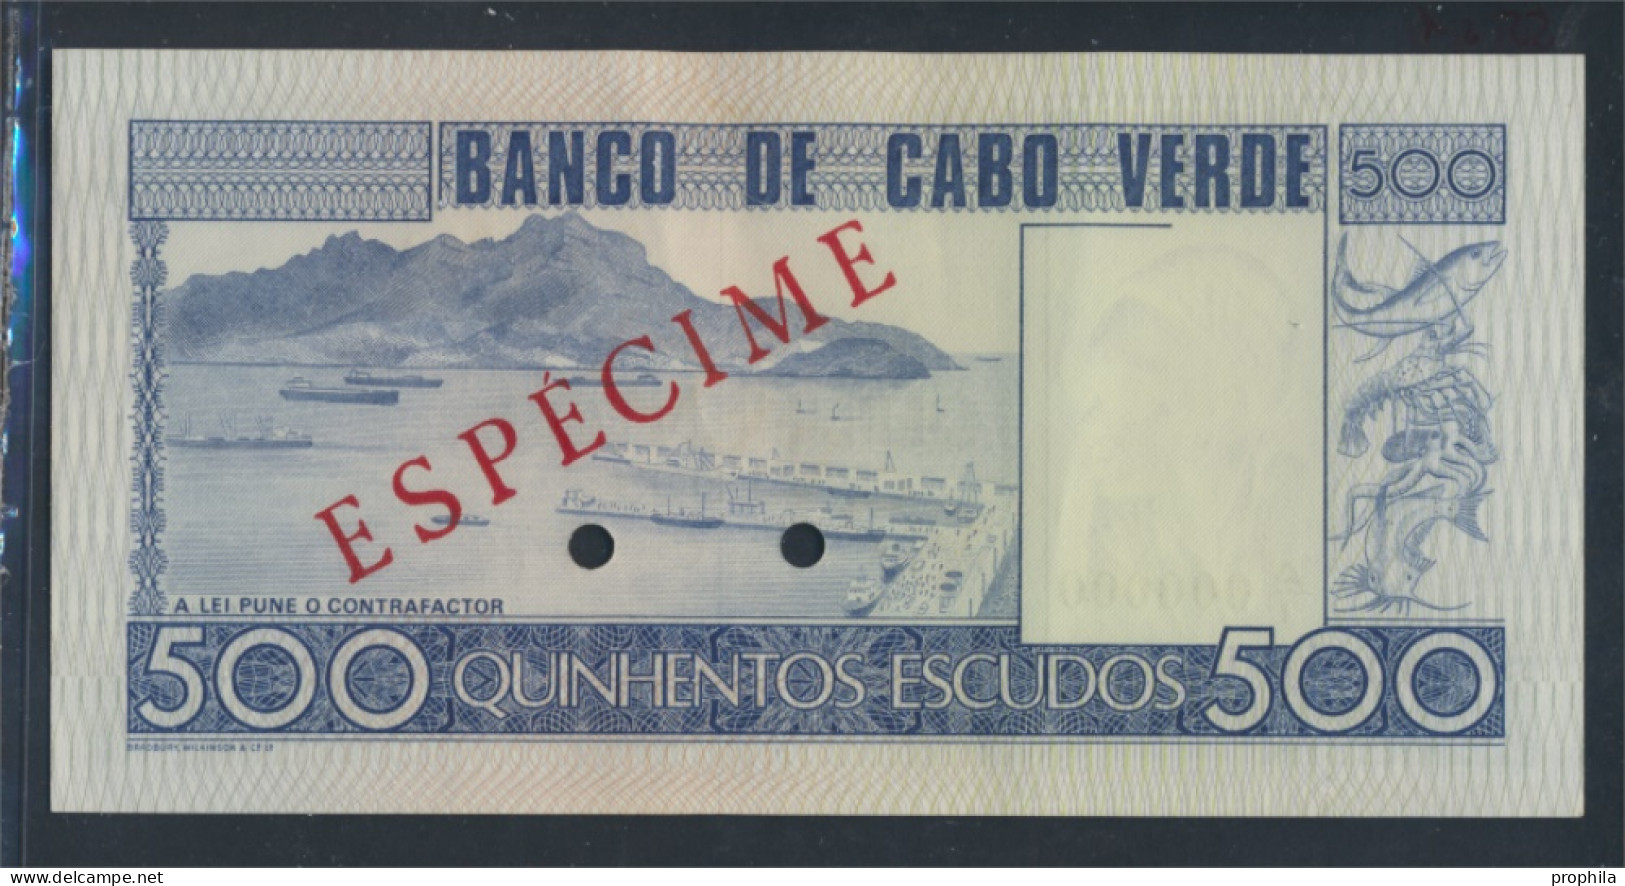 Kap Verde Pick-Nr: 55s1 Bankfrisch 1977 500 Escudos (9810998 - Cape Verde